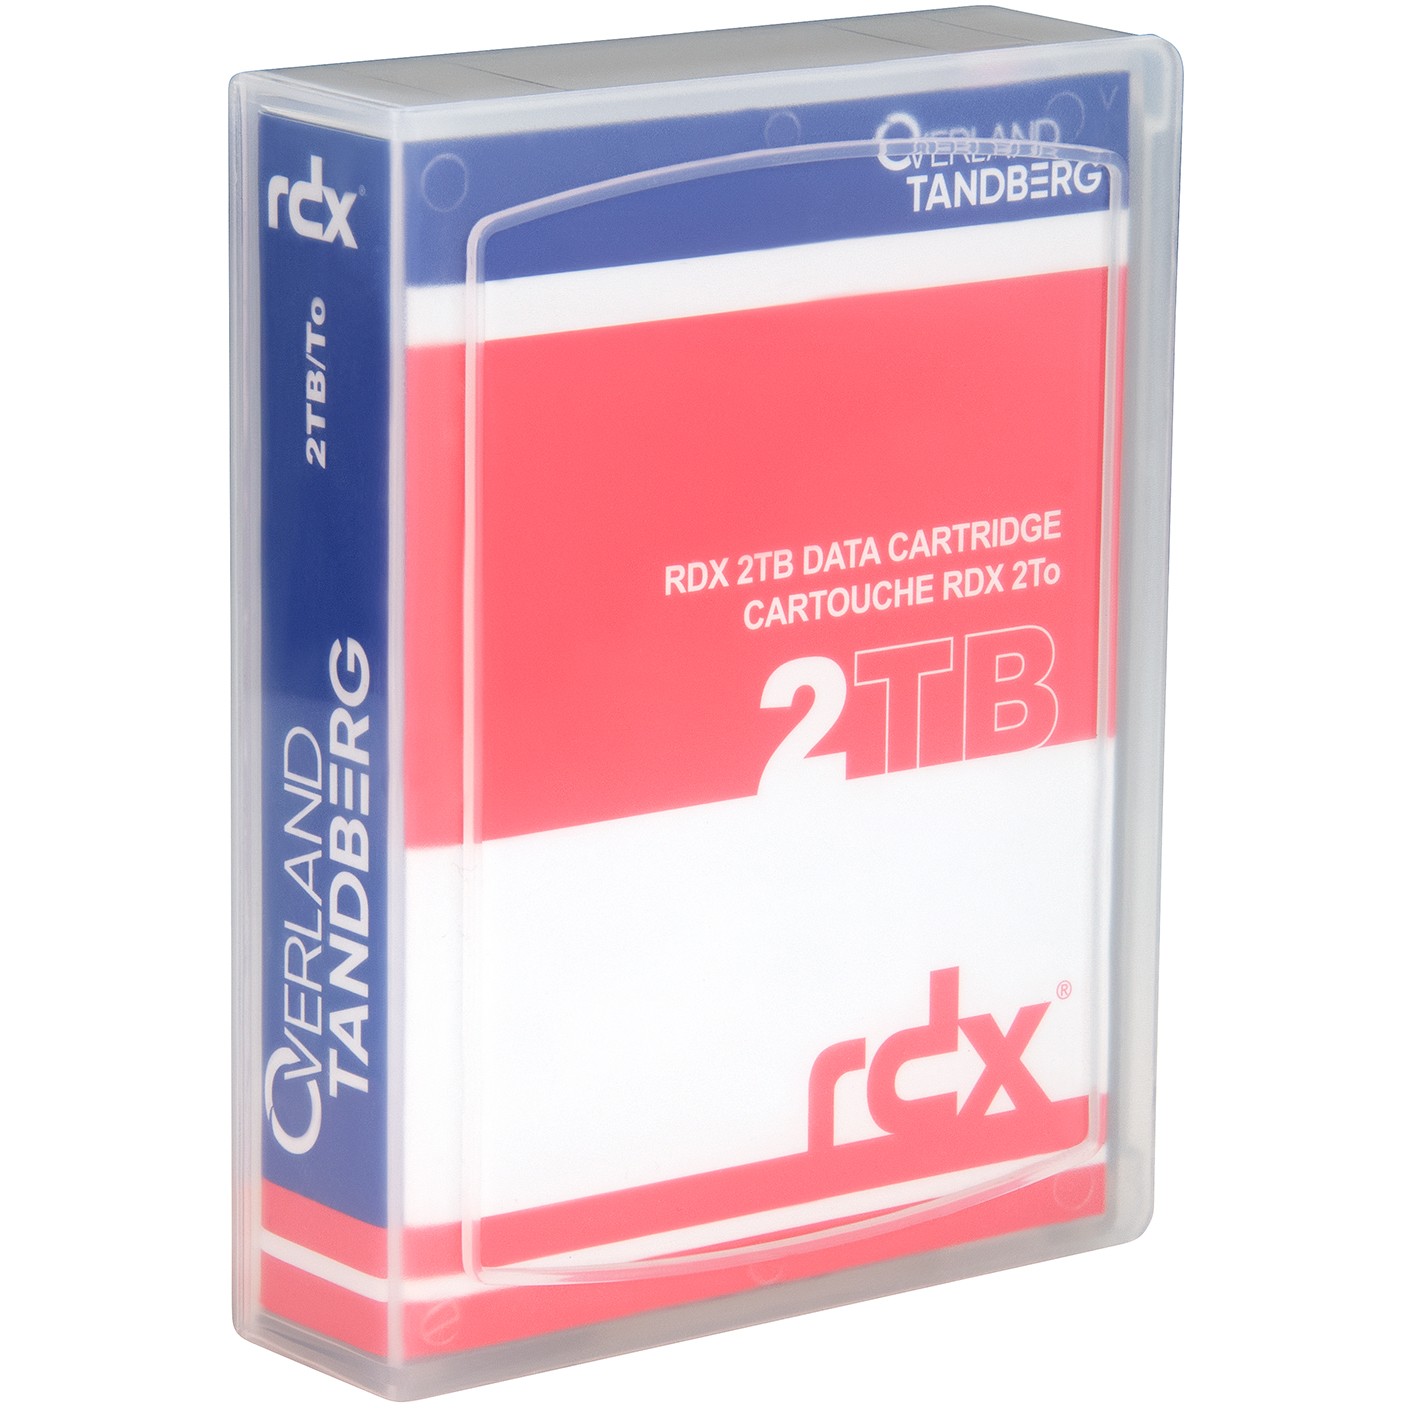 Overland-Tandberg 8731-RDX backup storage media